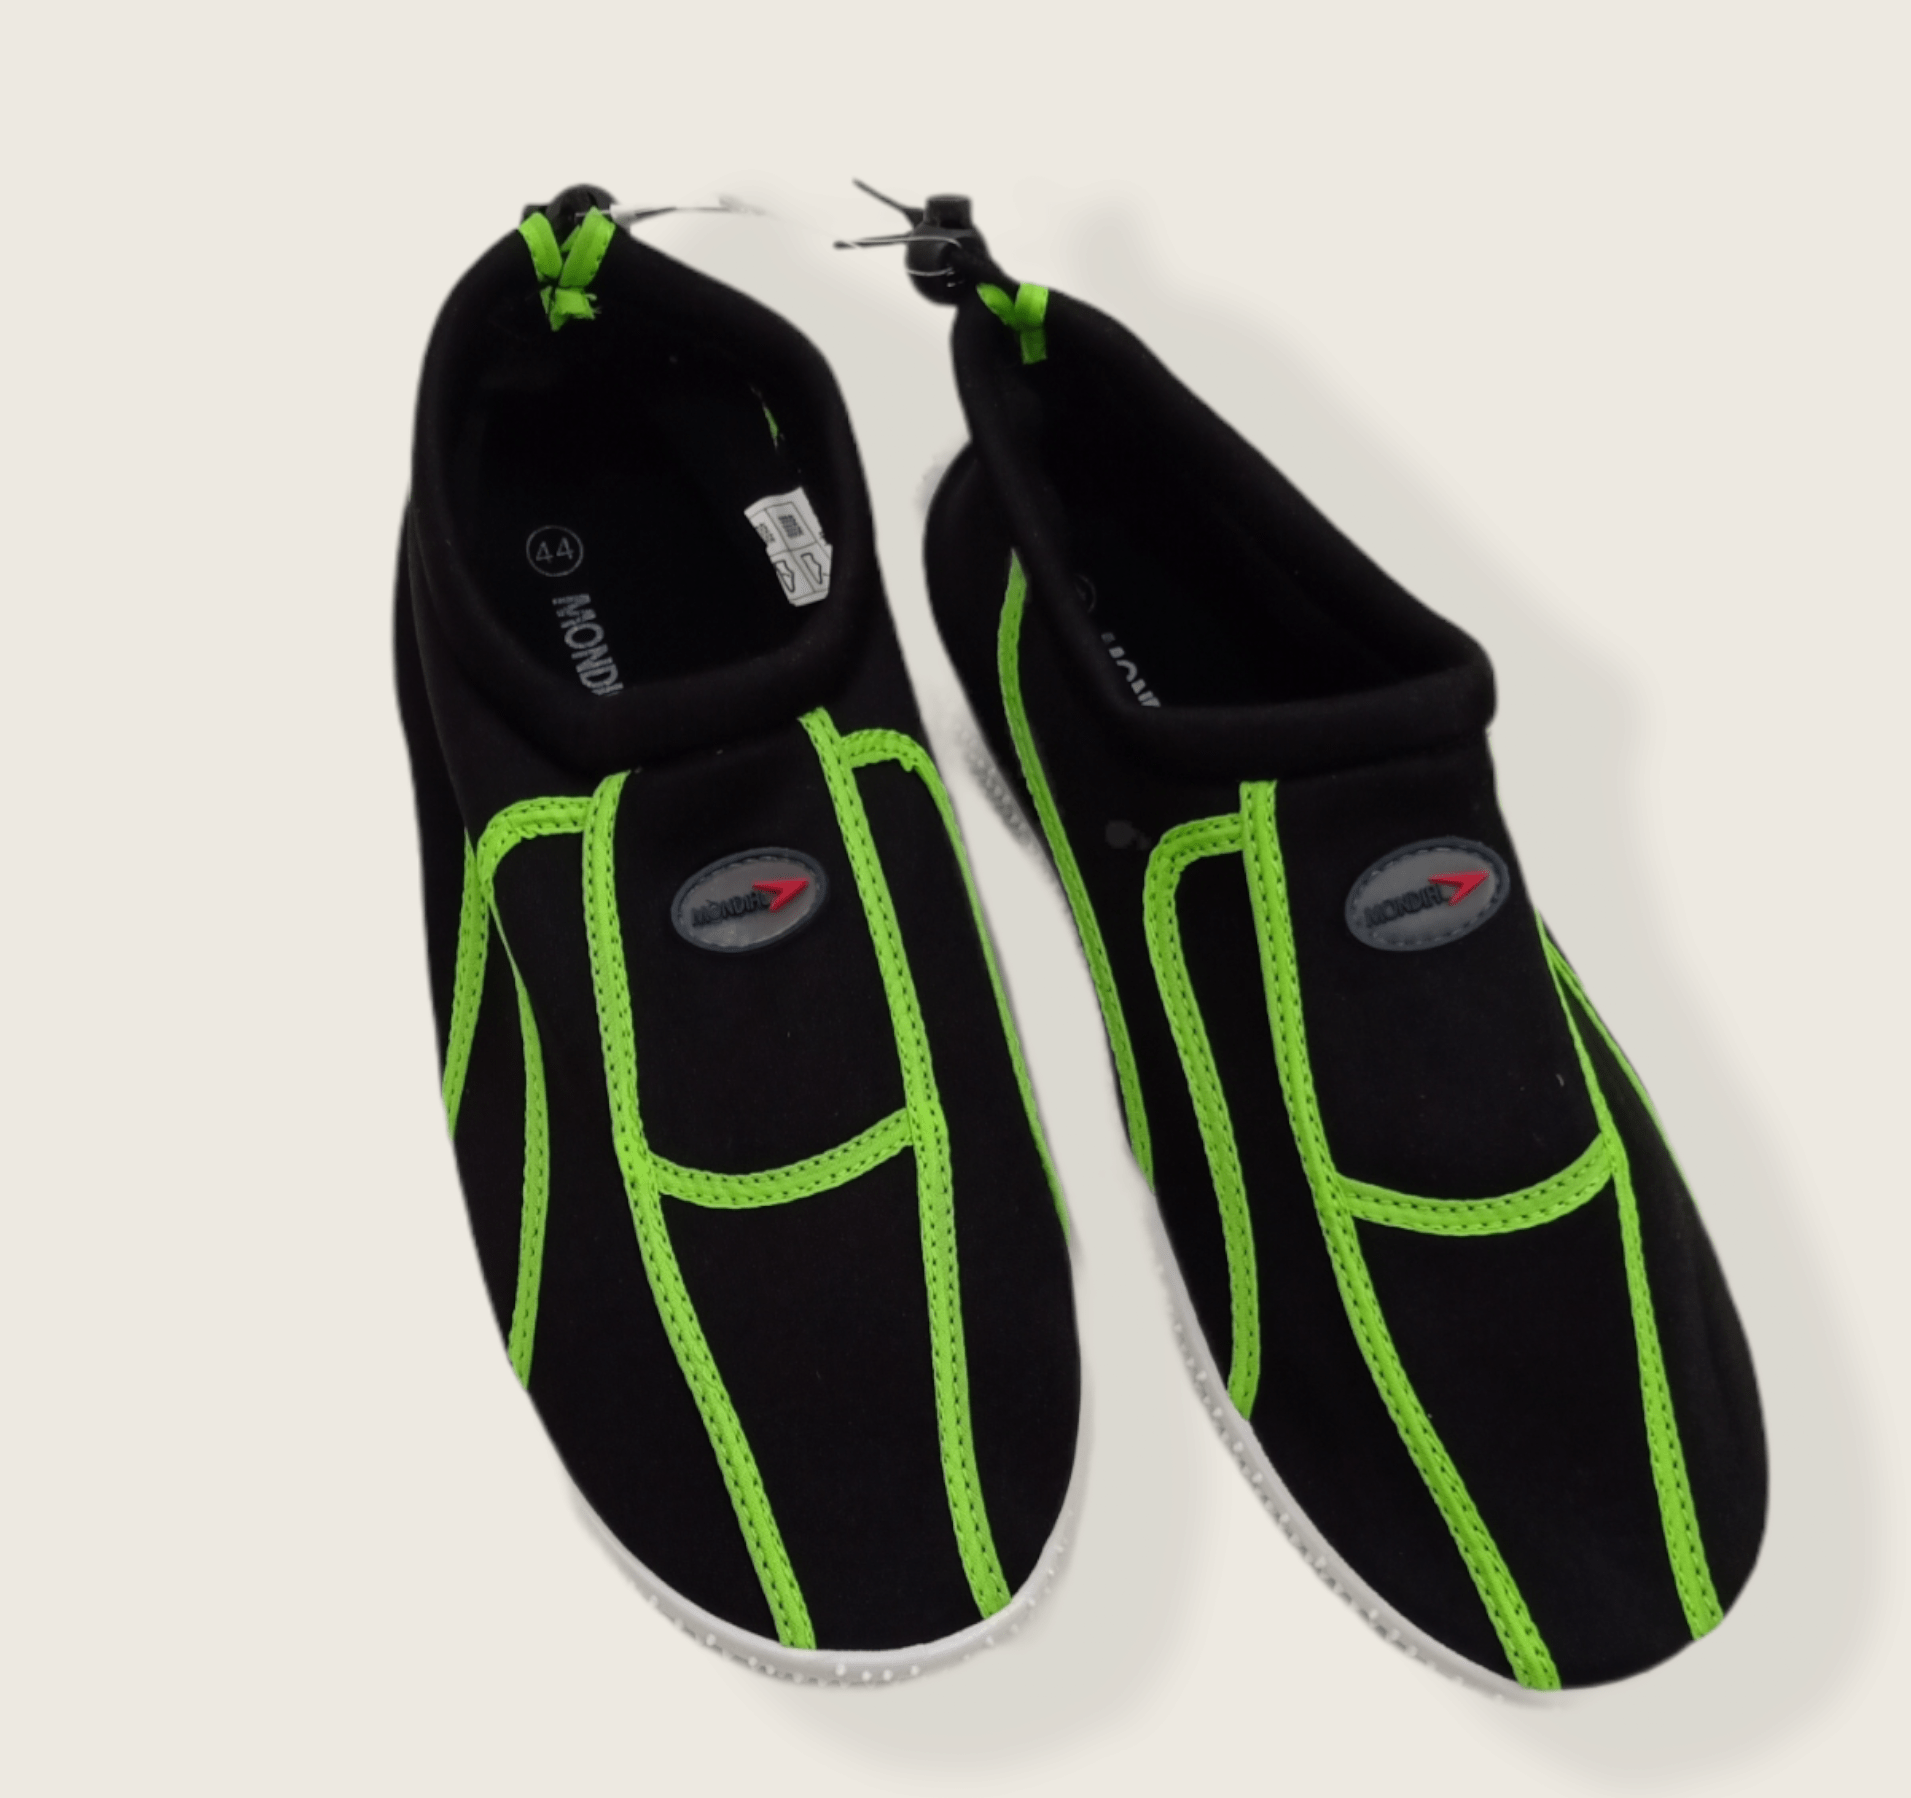 ElOutlet Sea Shoes Black x Green Sea Shoes